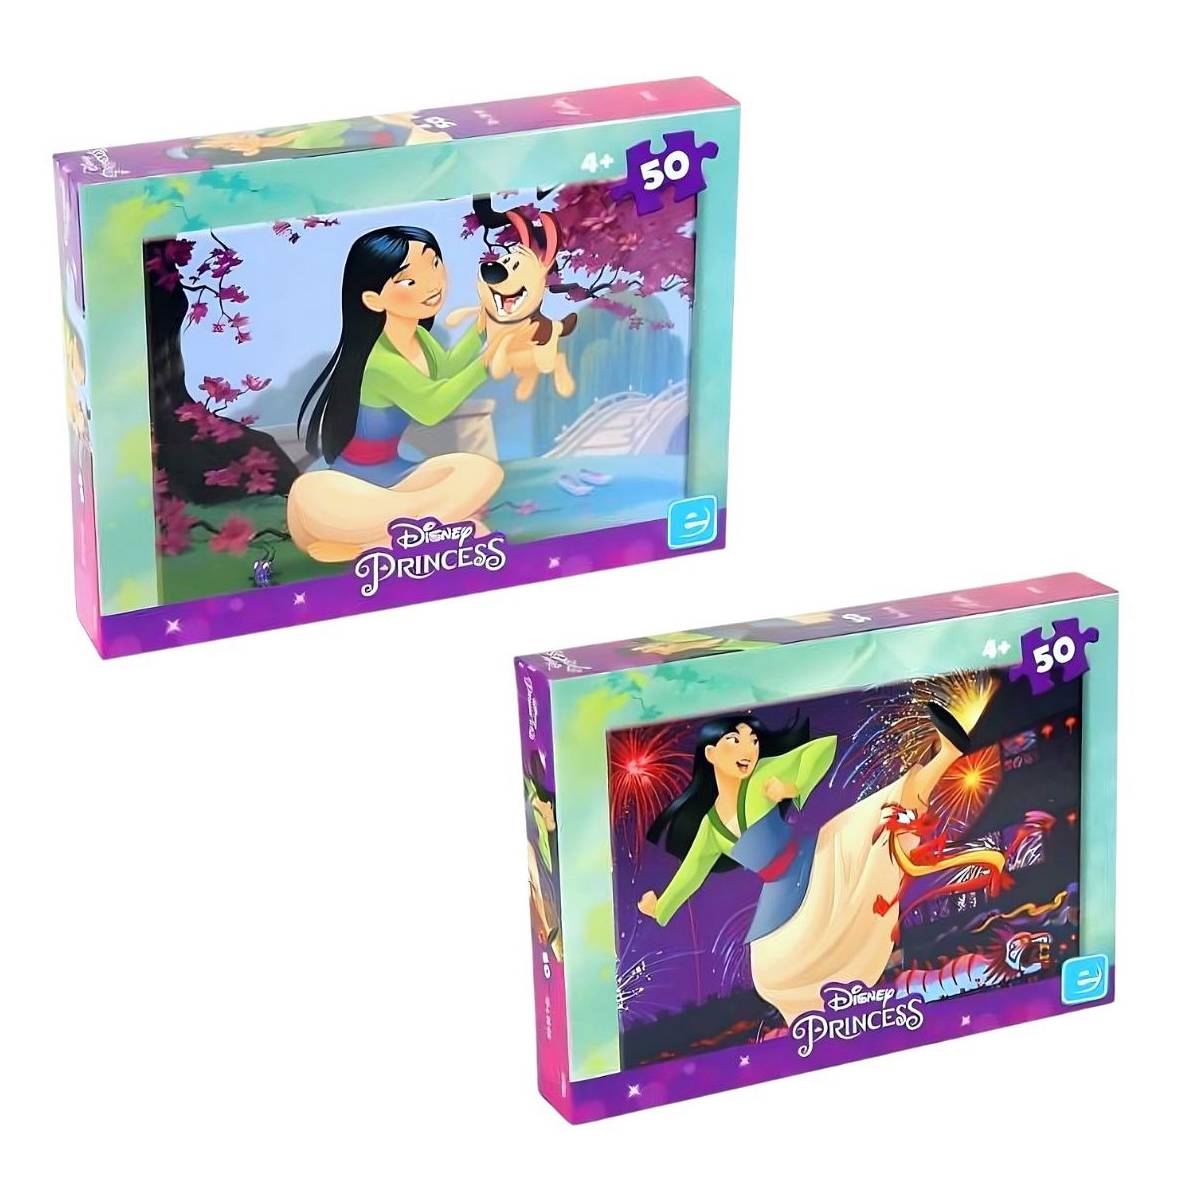 Disney Princess Mulan 50 Piece Jigsaw Puzzle